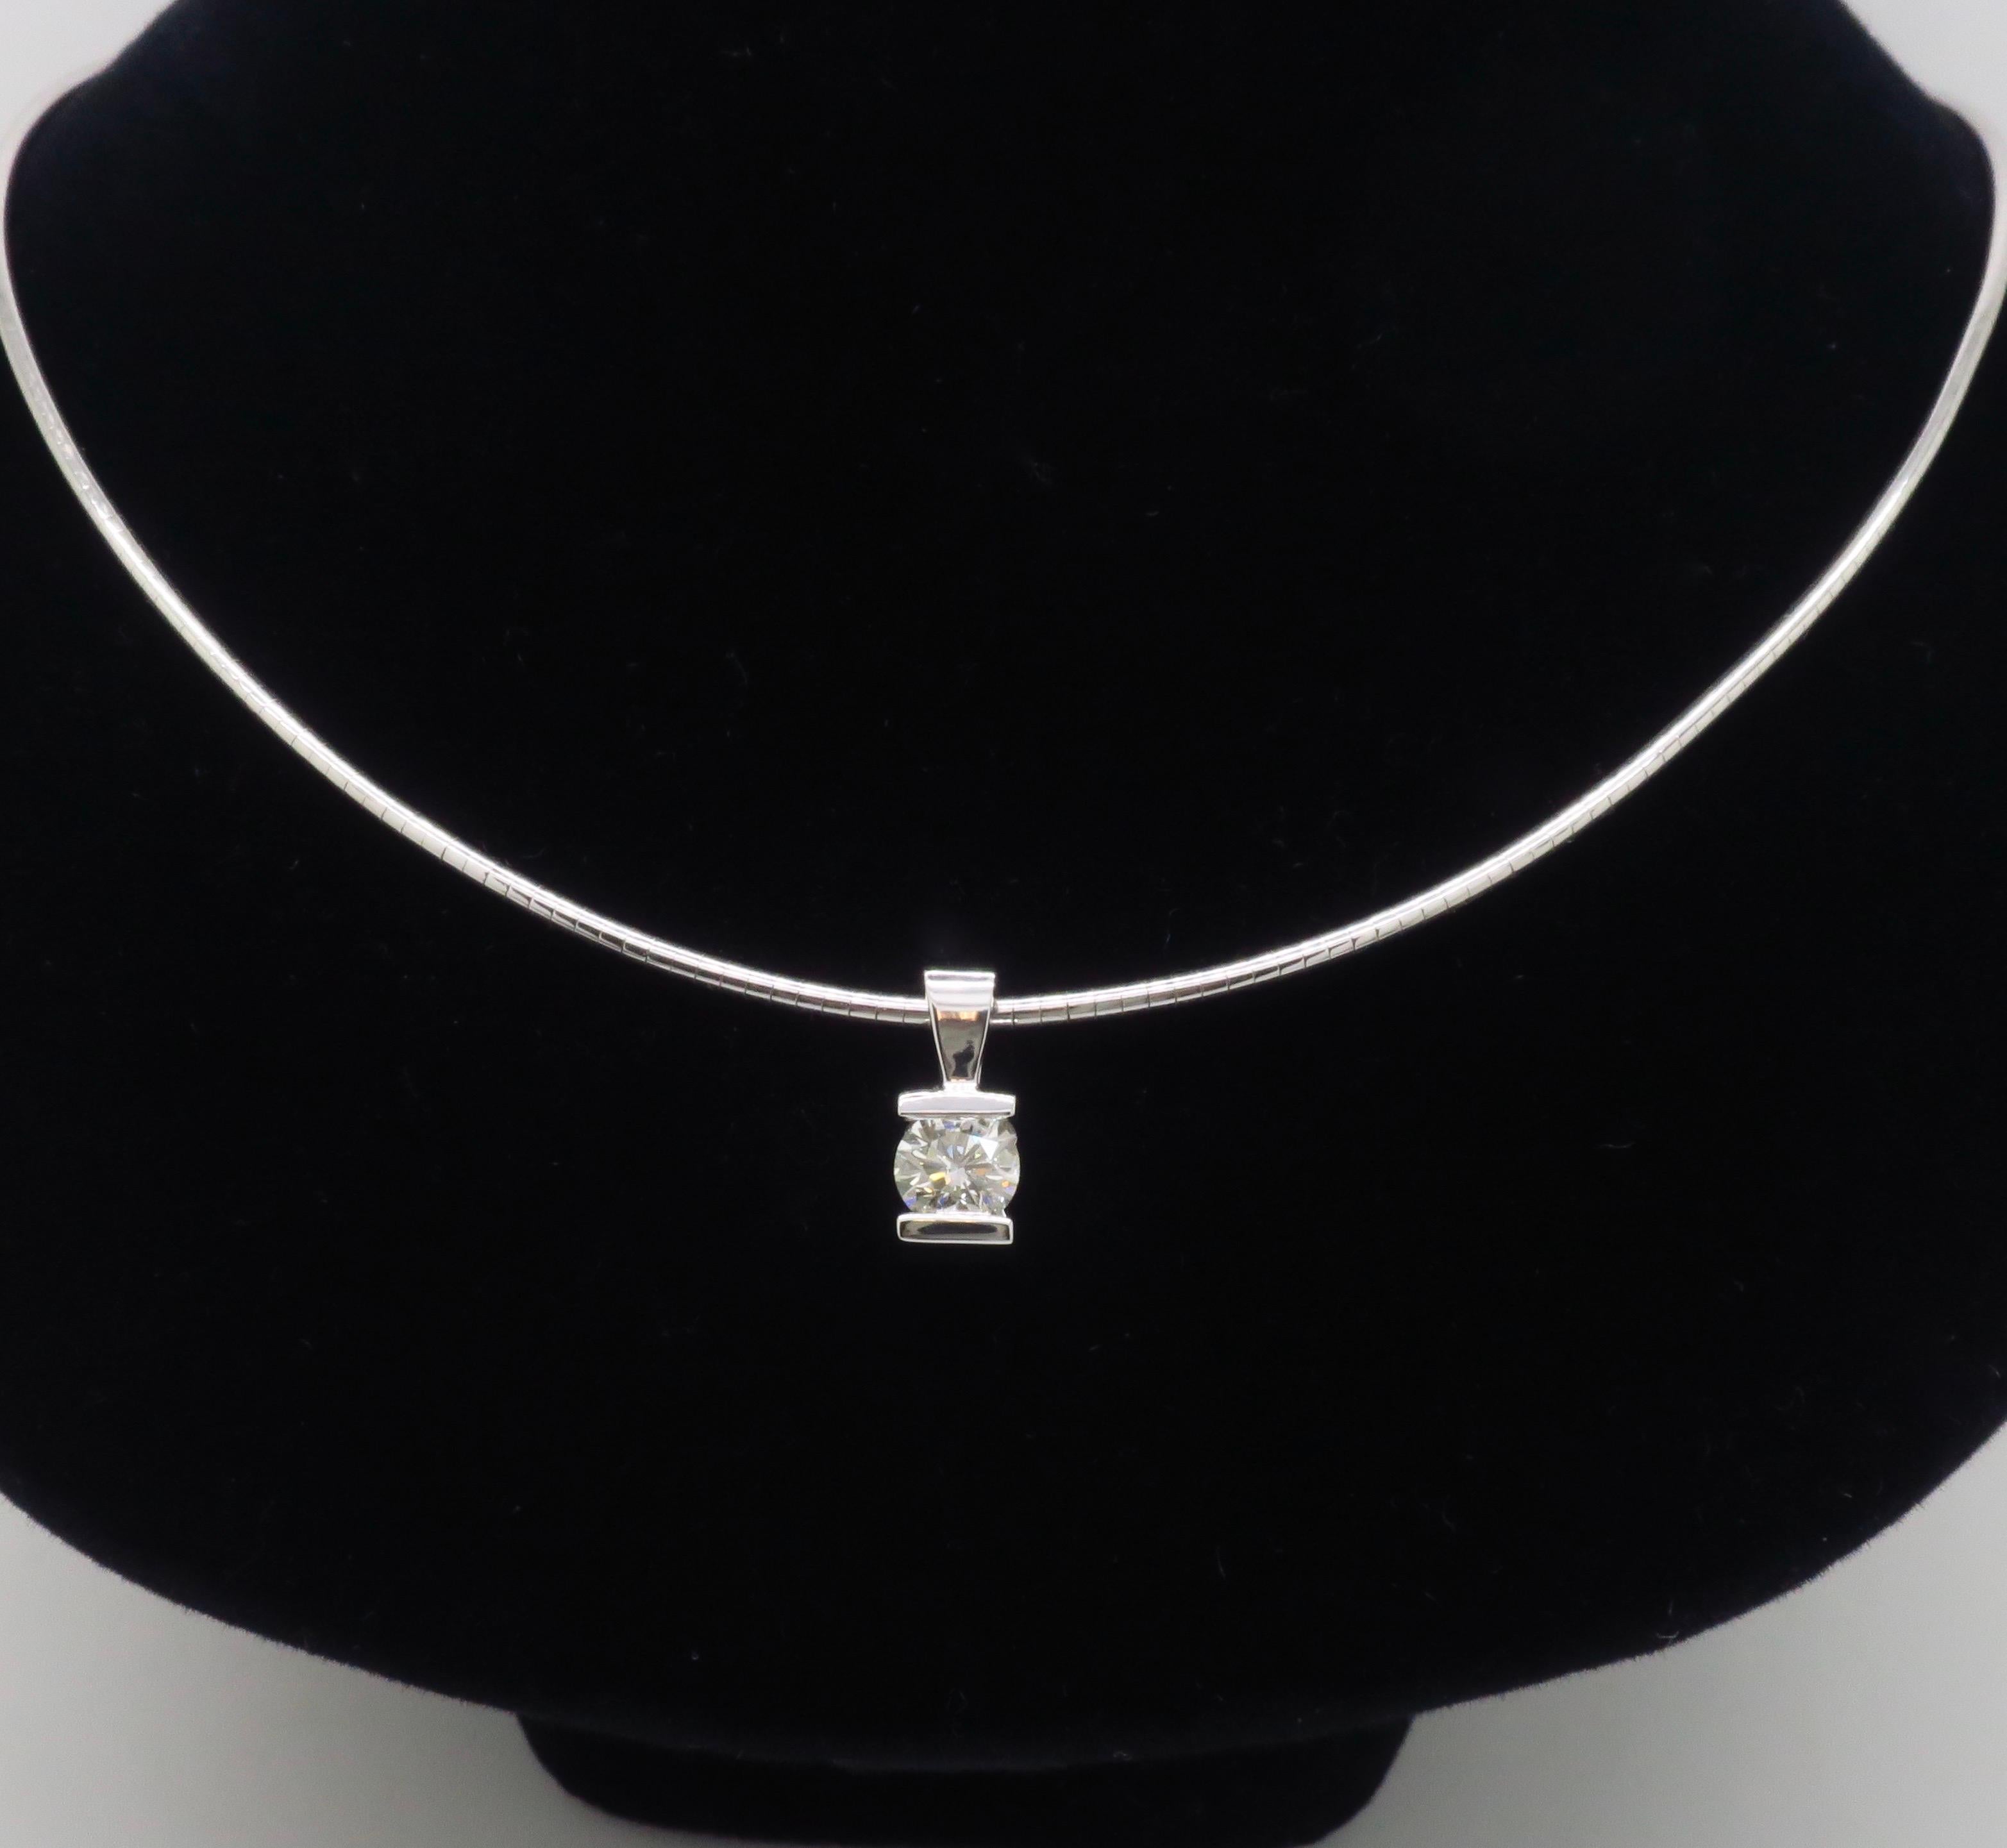 Women's Tension Set Diamond Solitaire Pendant Collar Style Necklace 